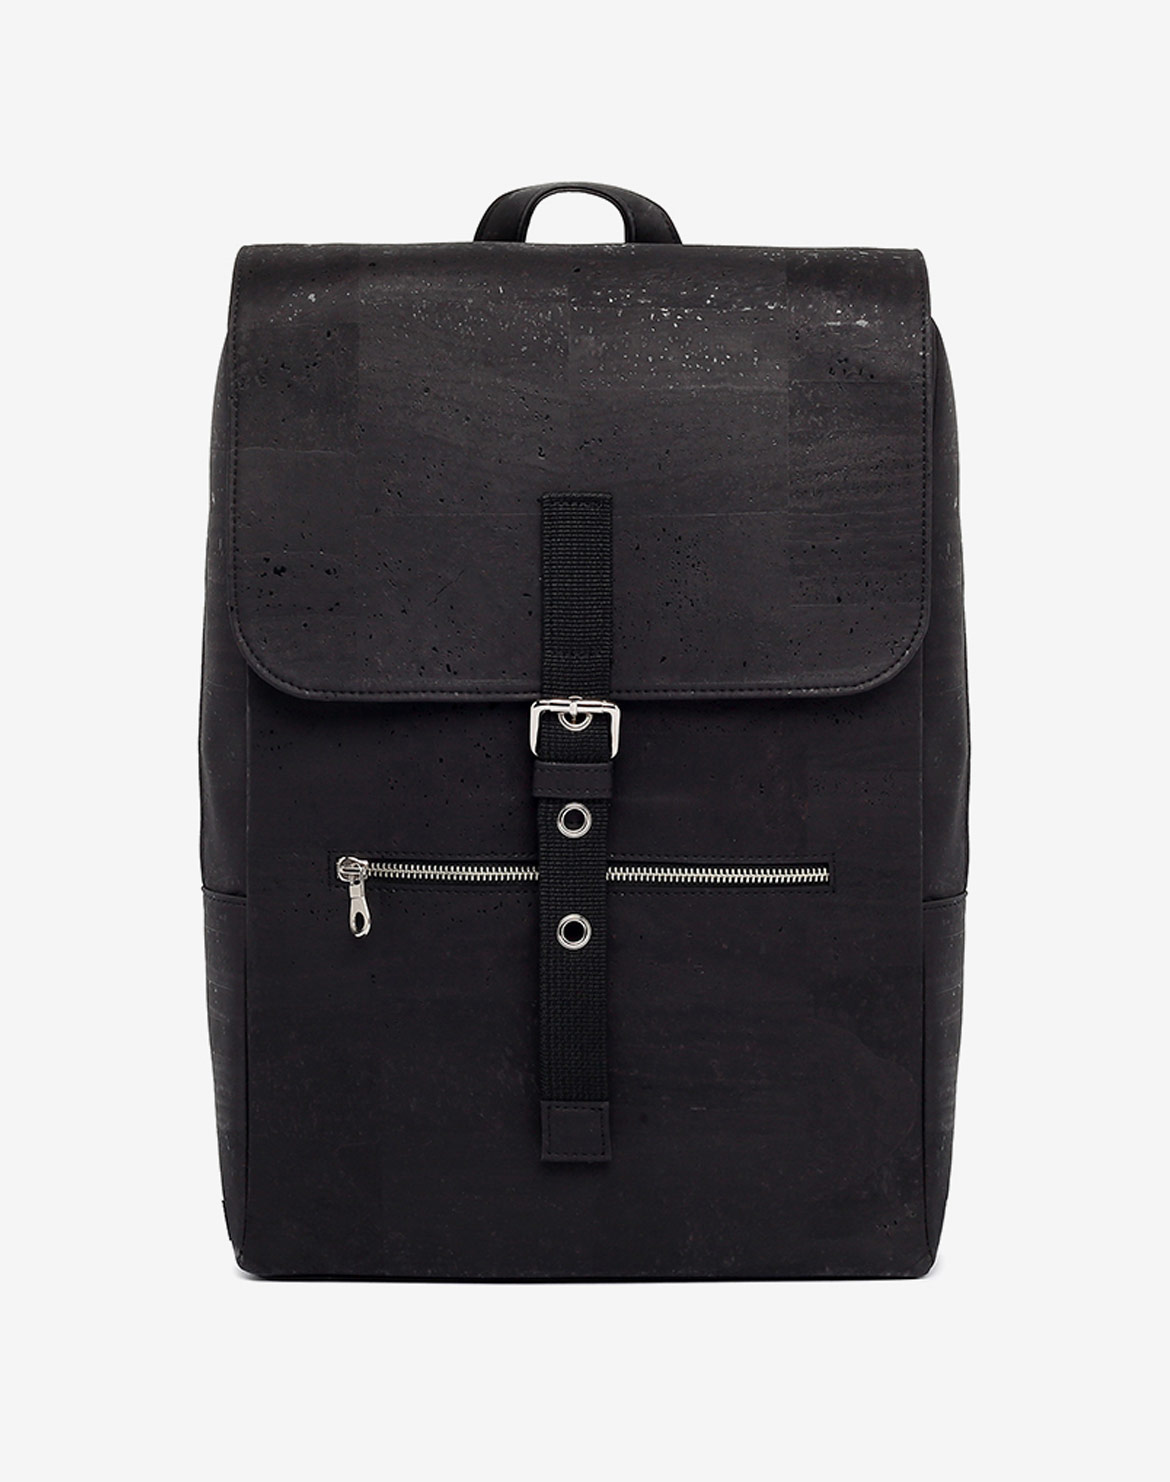 Rucksack | Bags & Backpacks | Accessories | Women | muso koroni